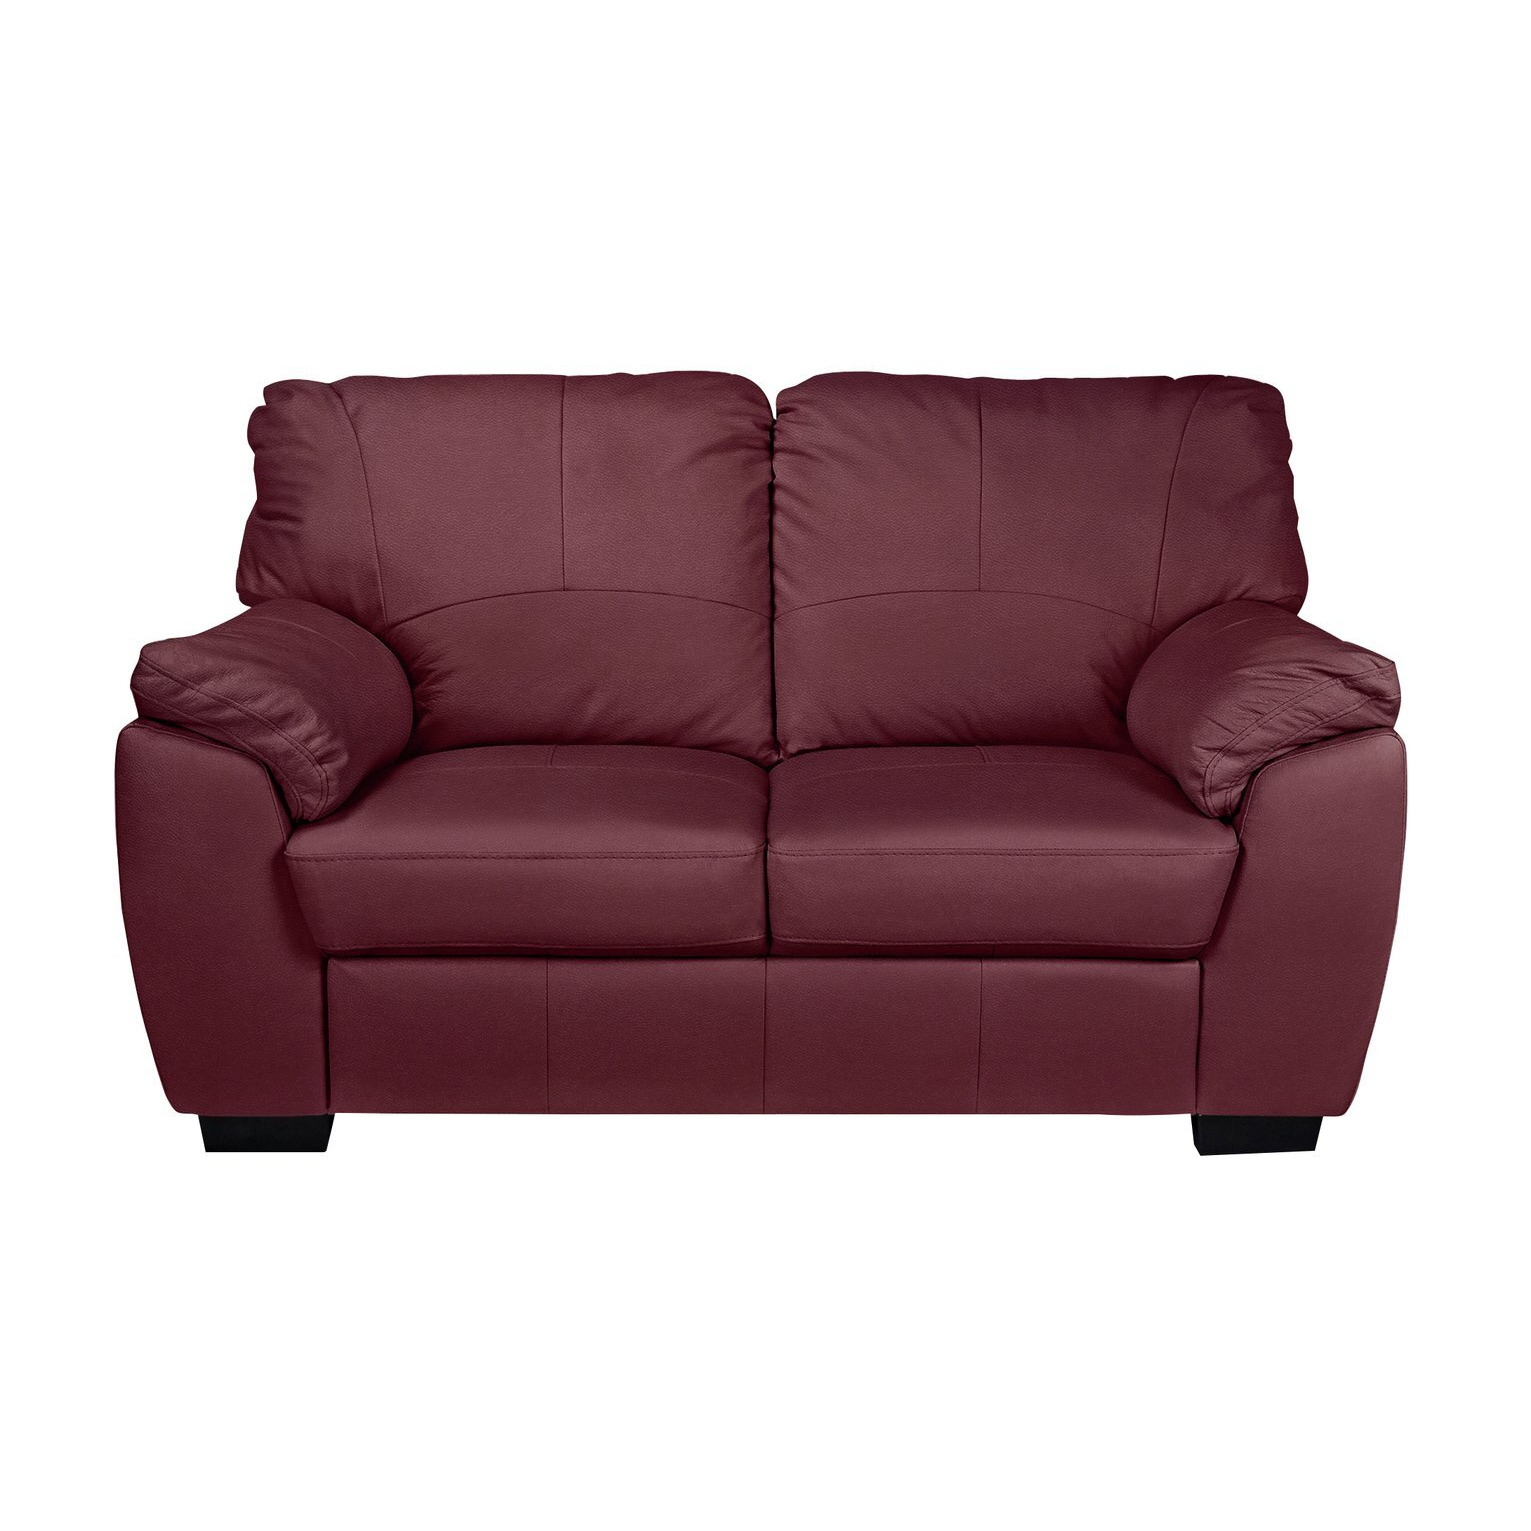 Argos Home Milano Leather 2 Seater Sofa - Burgundy - image 1